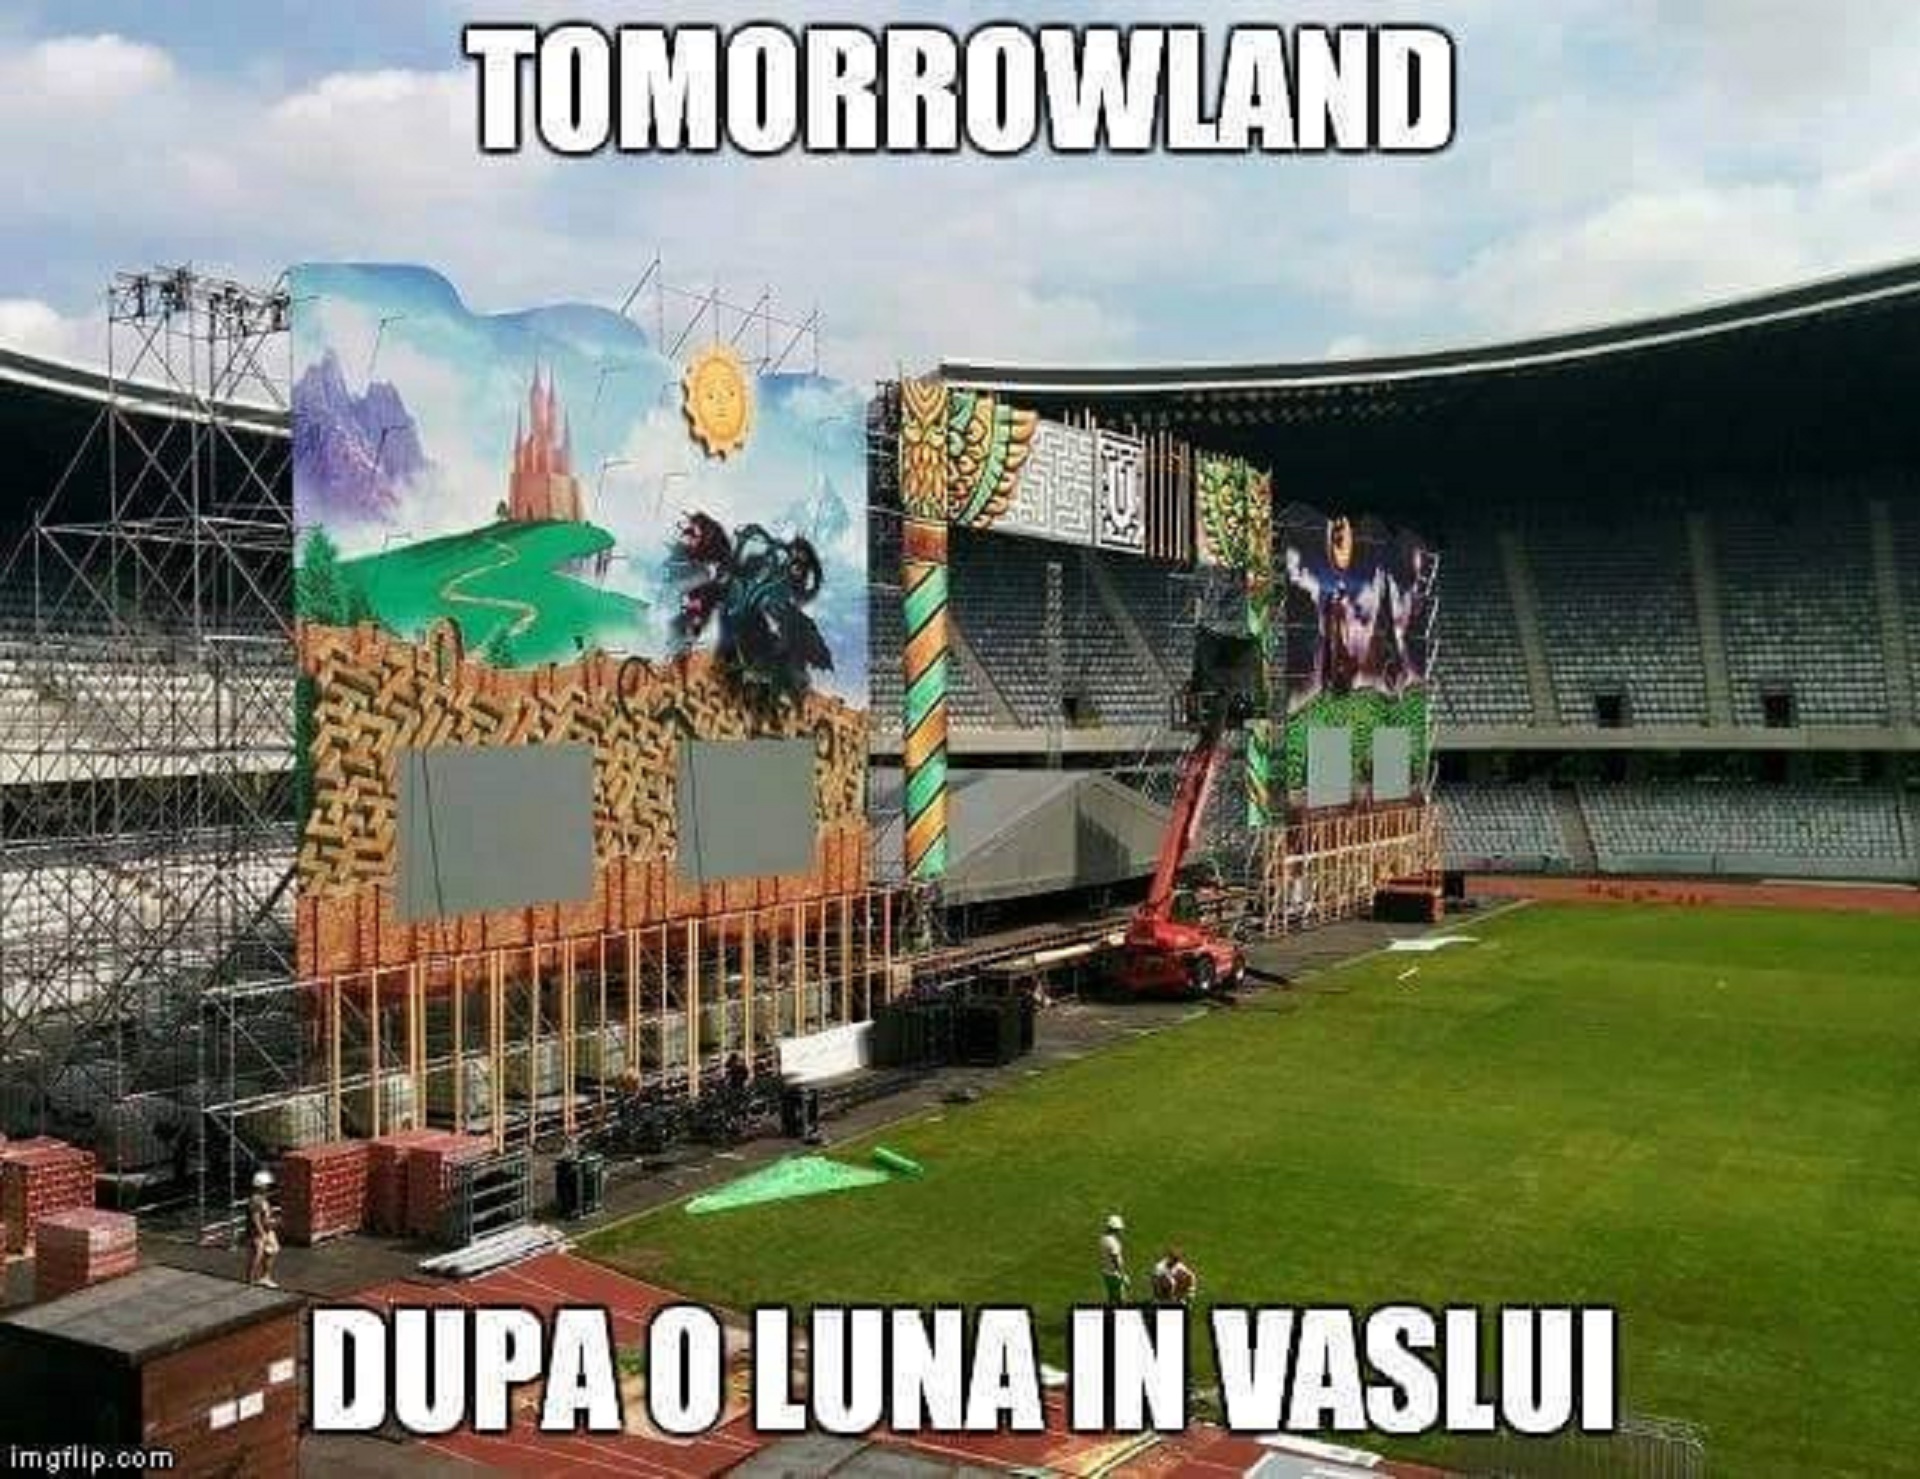 Untold Festival, Tomorrowland-ul de România